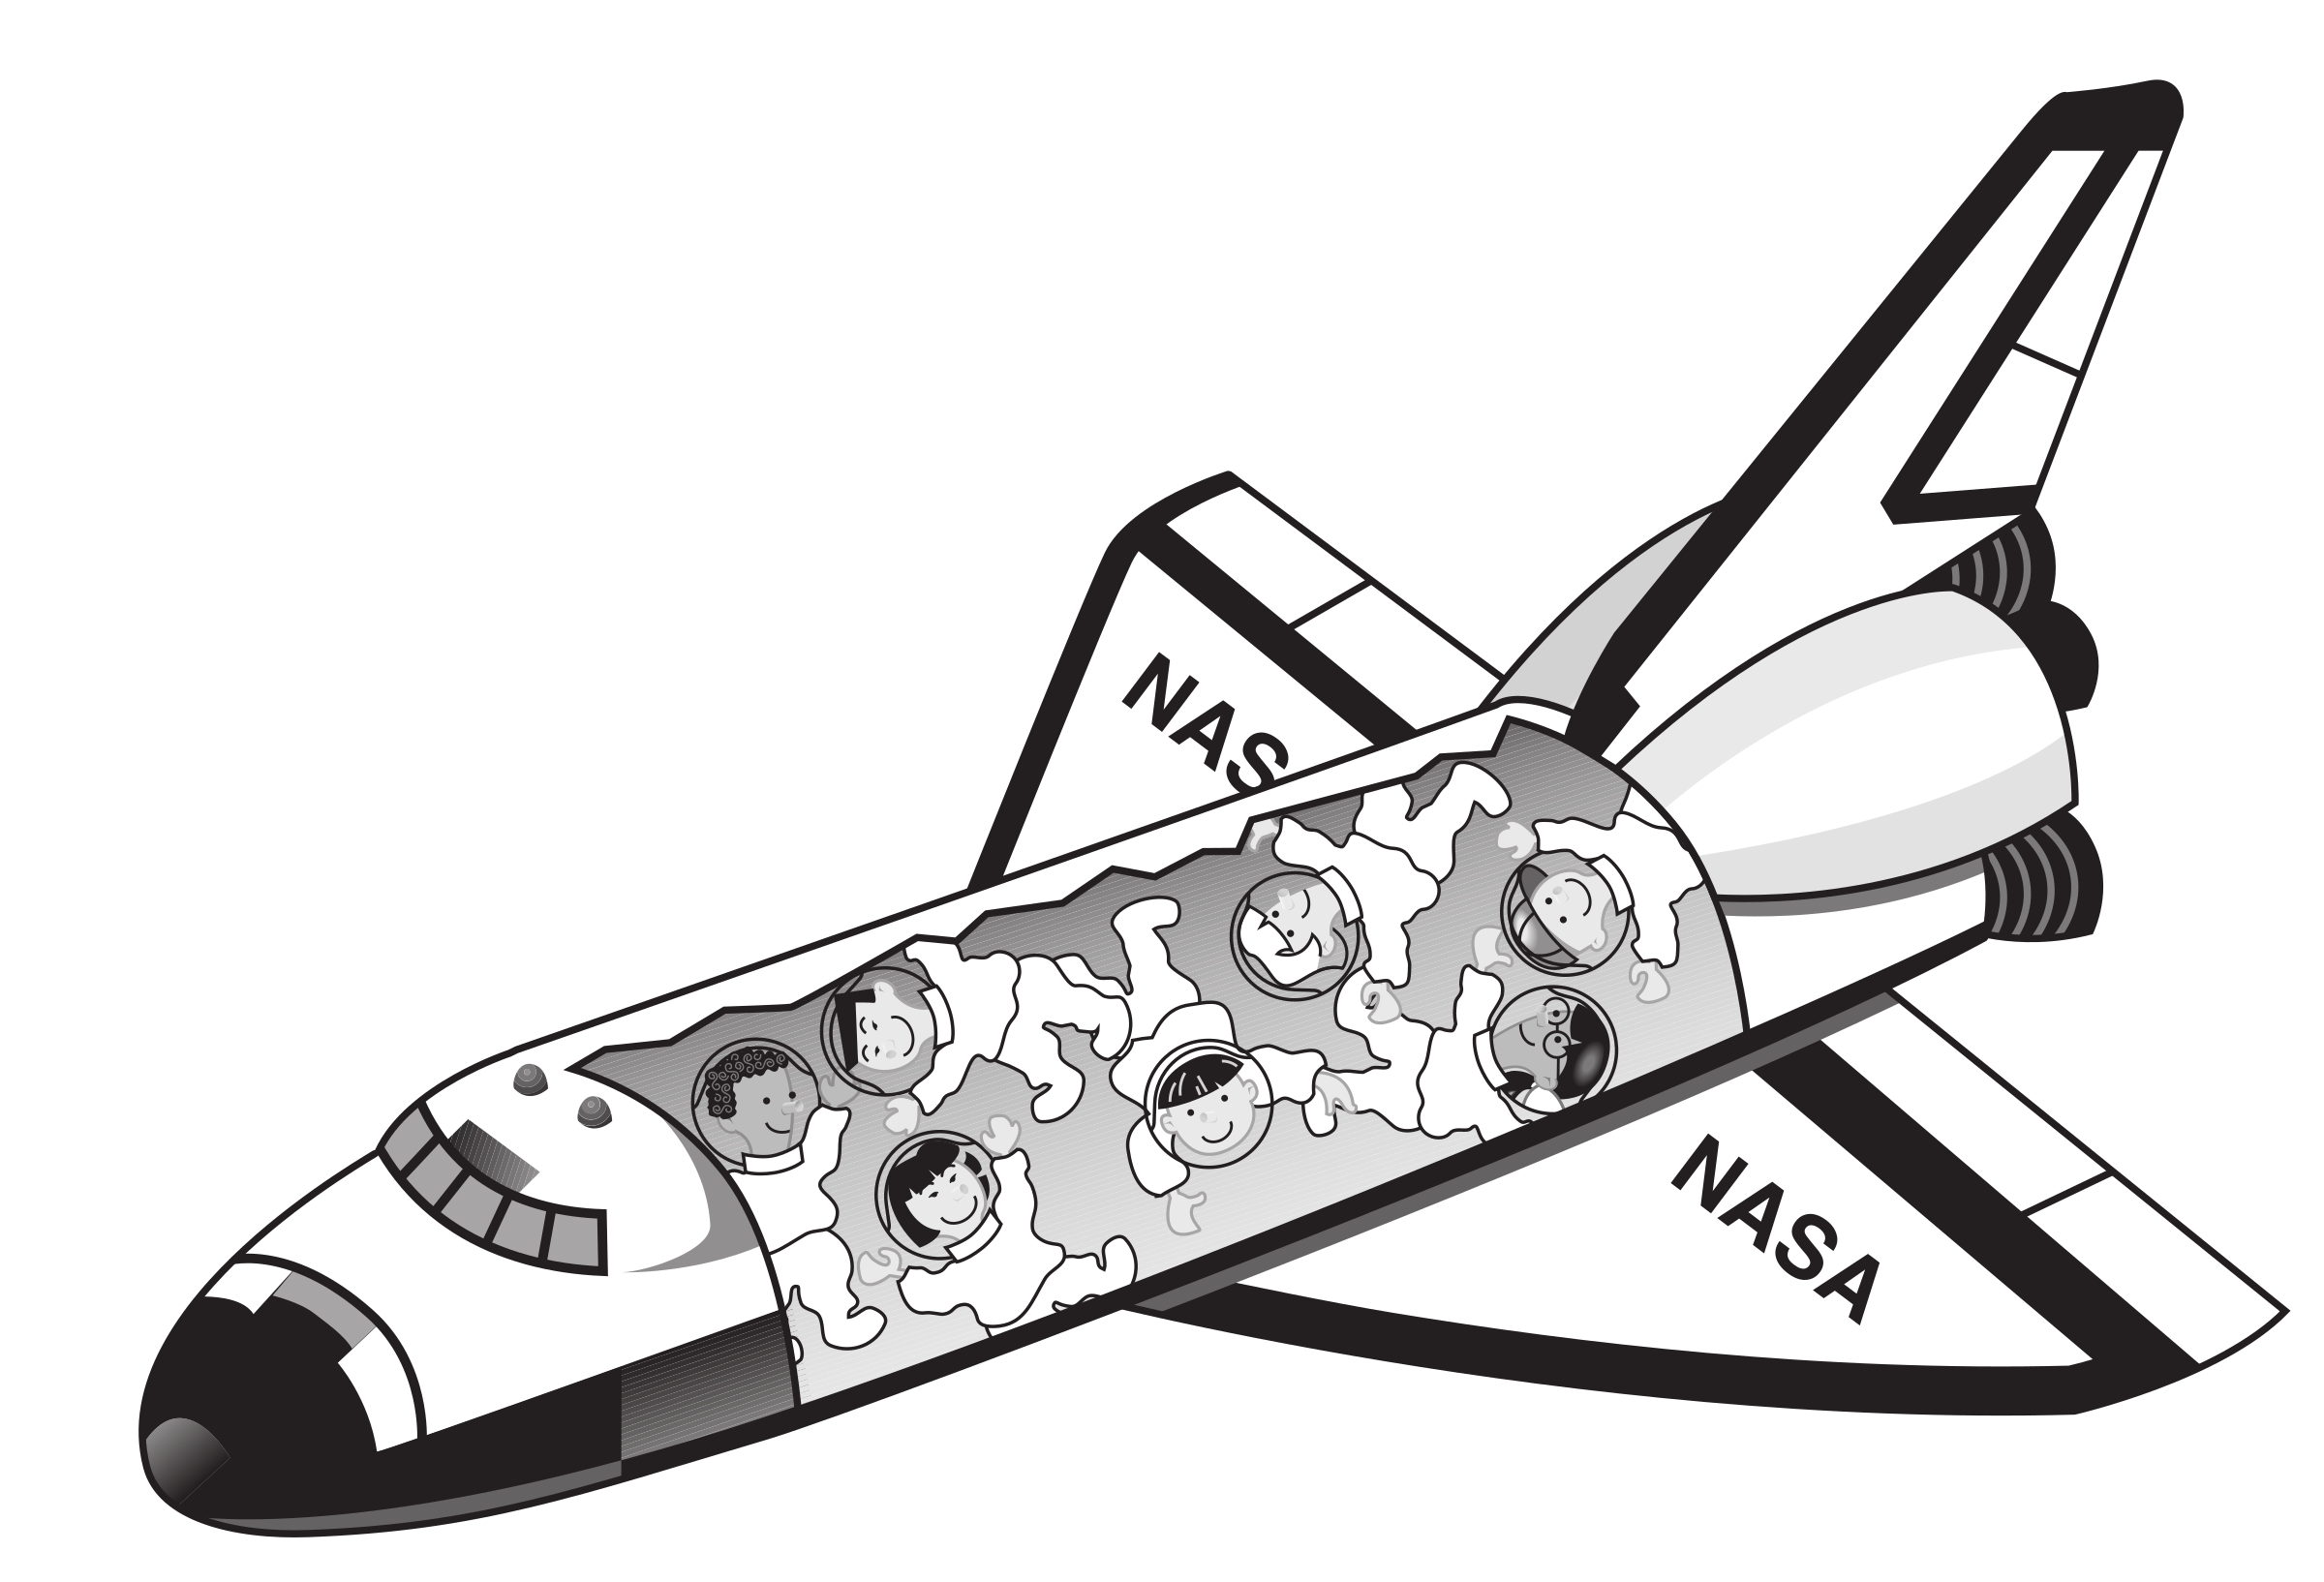 Spaceship clipart broken. Space shuttle with kids